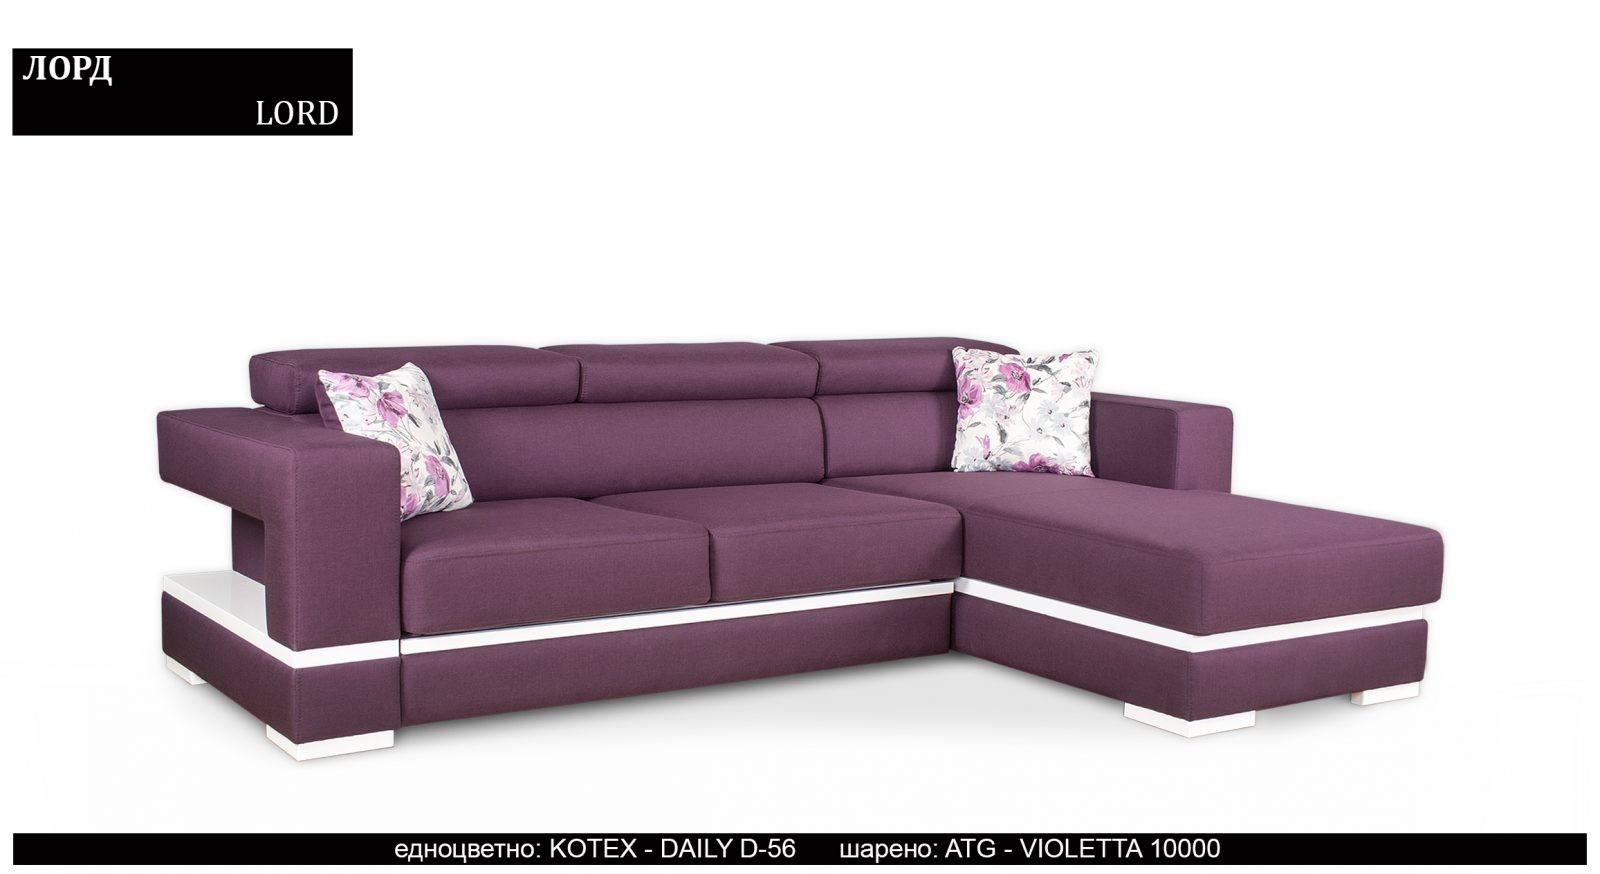 (Български) Луксозен  ъглов диван |»ЛОРД»| Руди-Ан